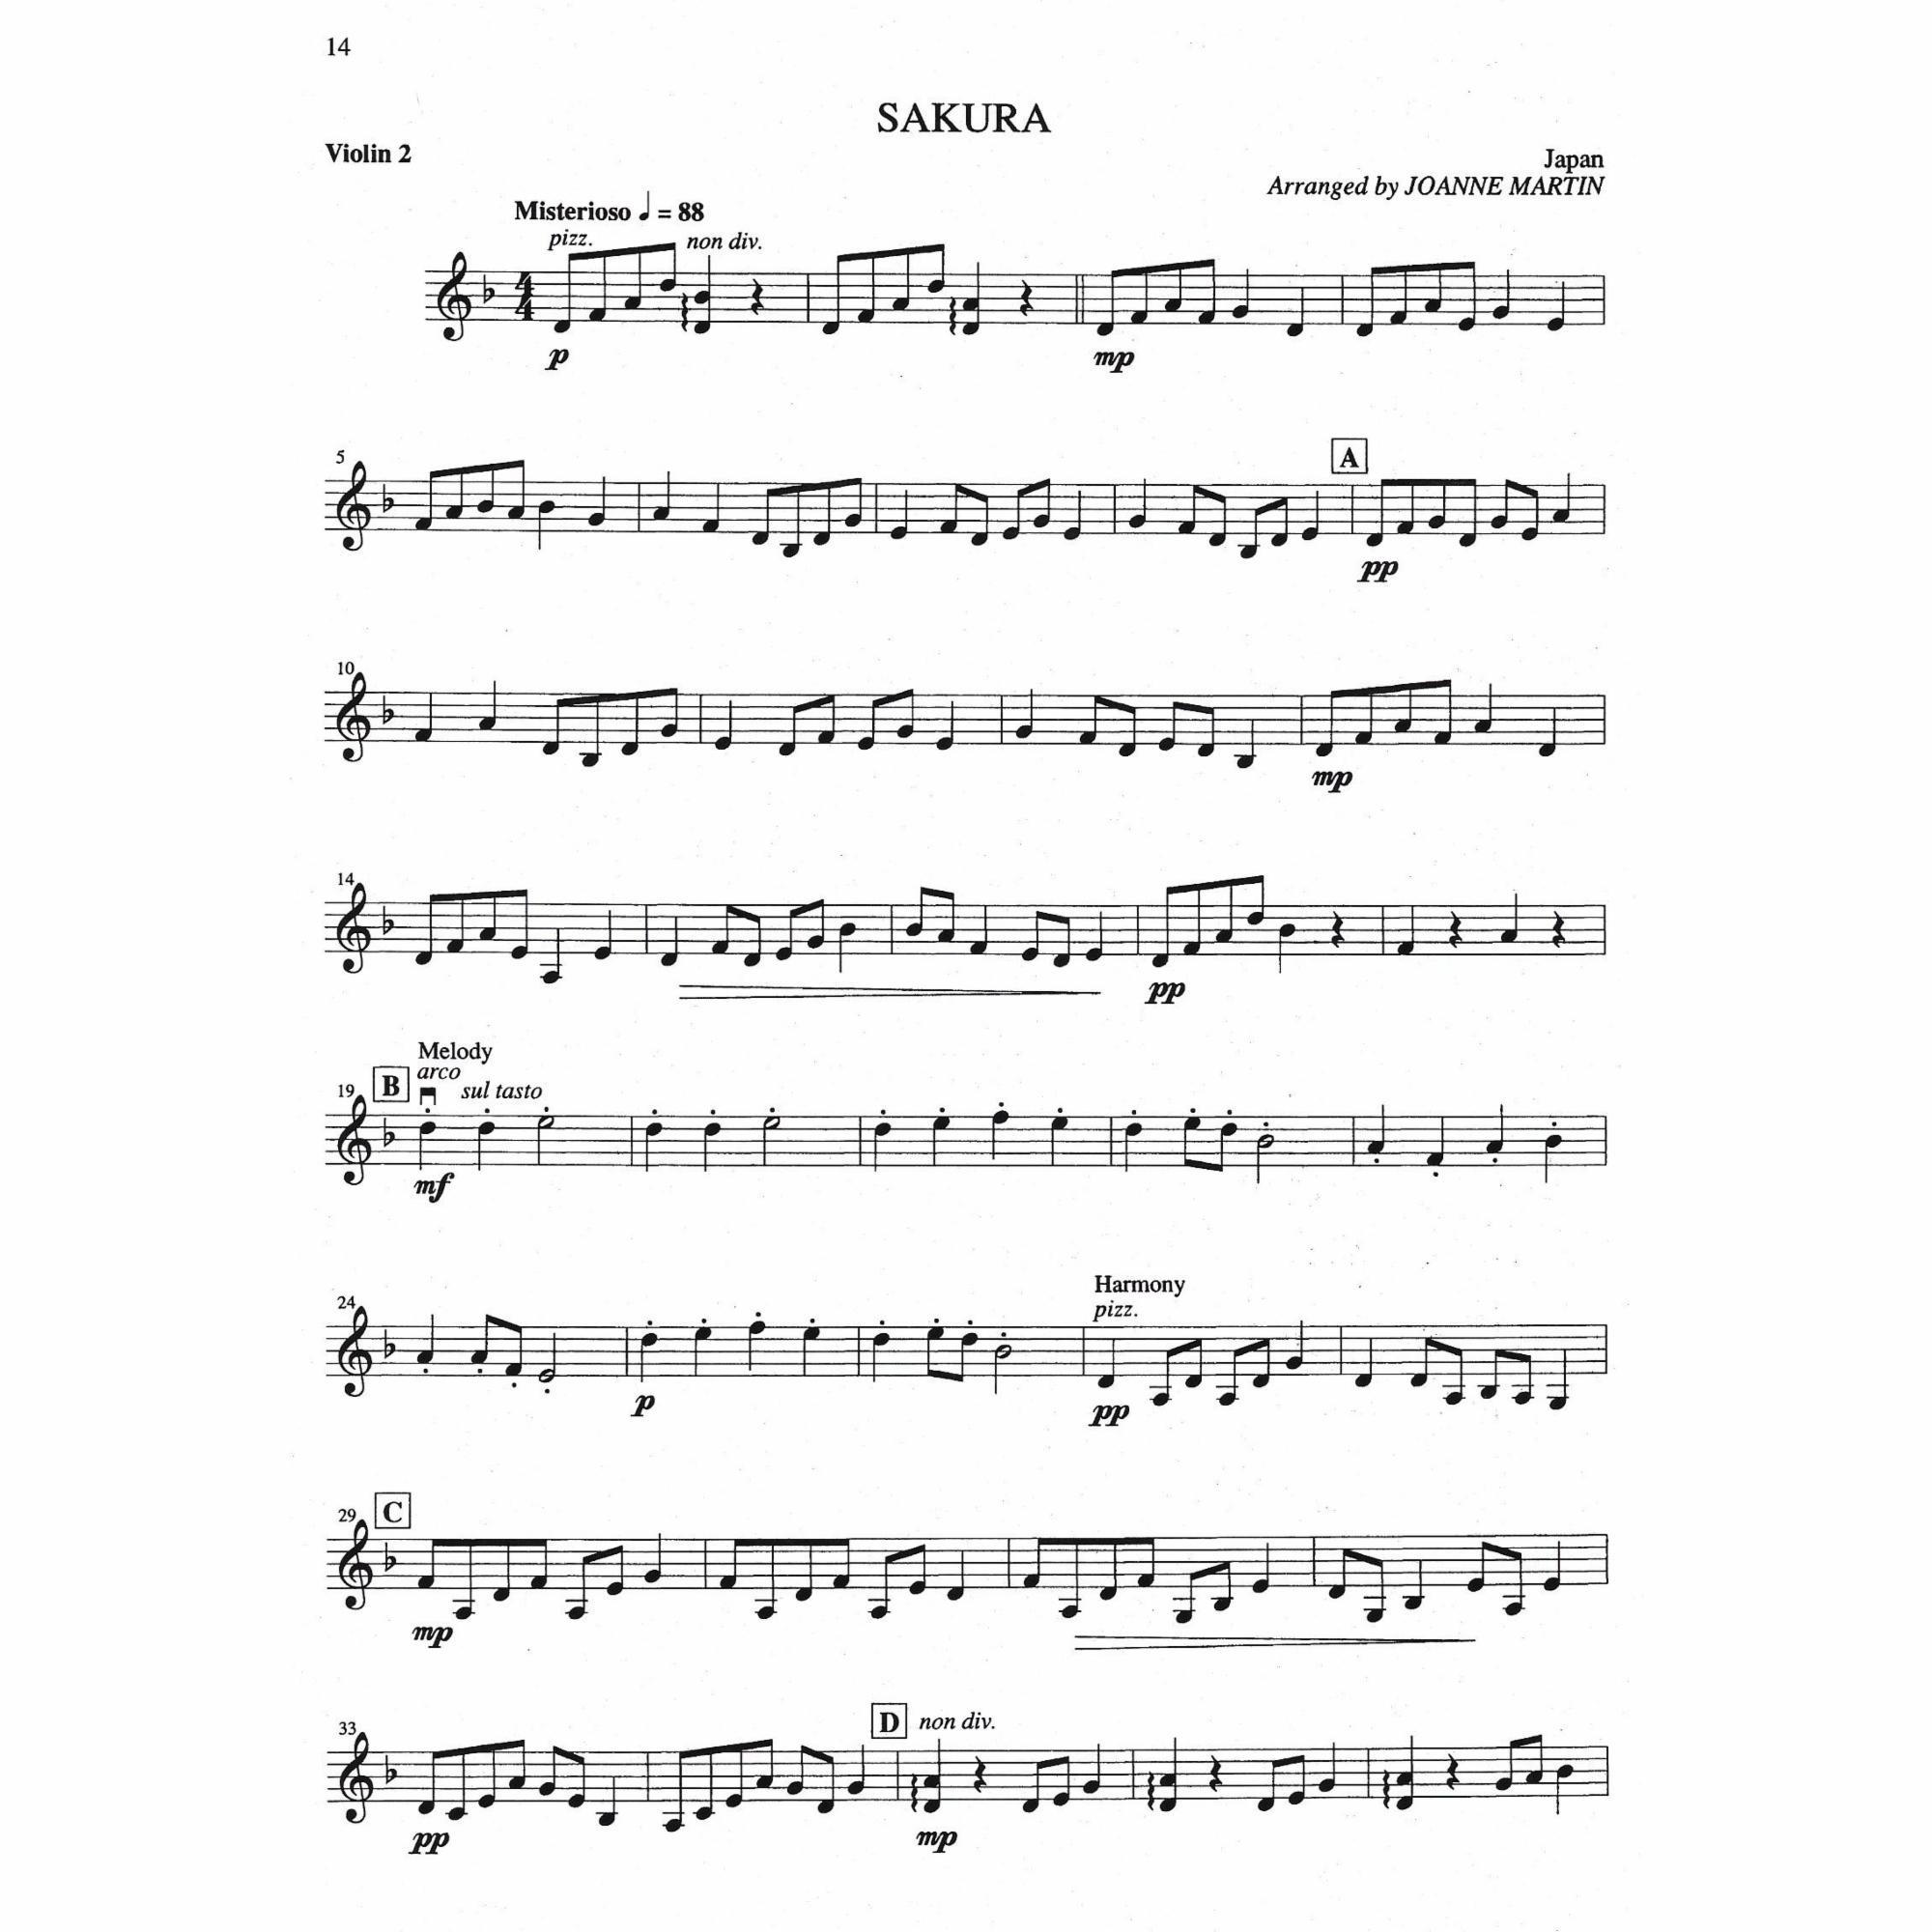 Sample: Second Violin (Pg. 14)